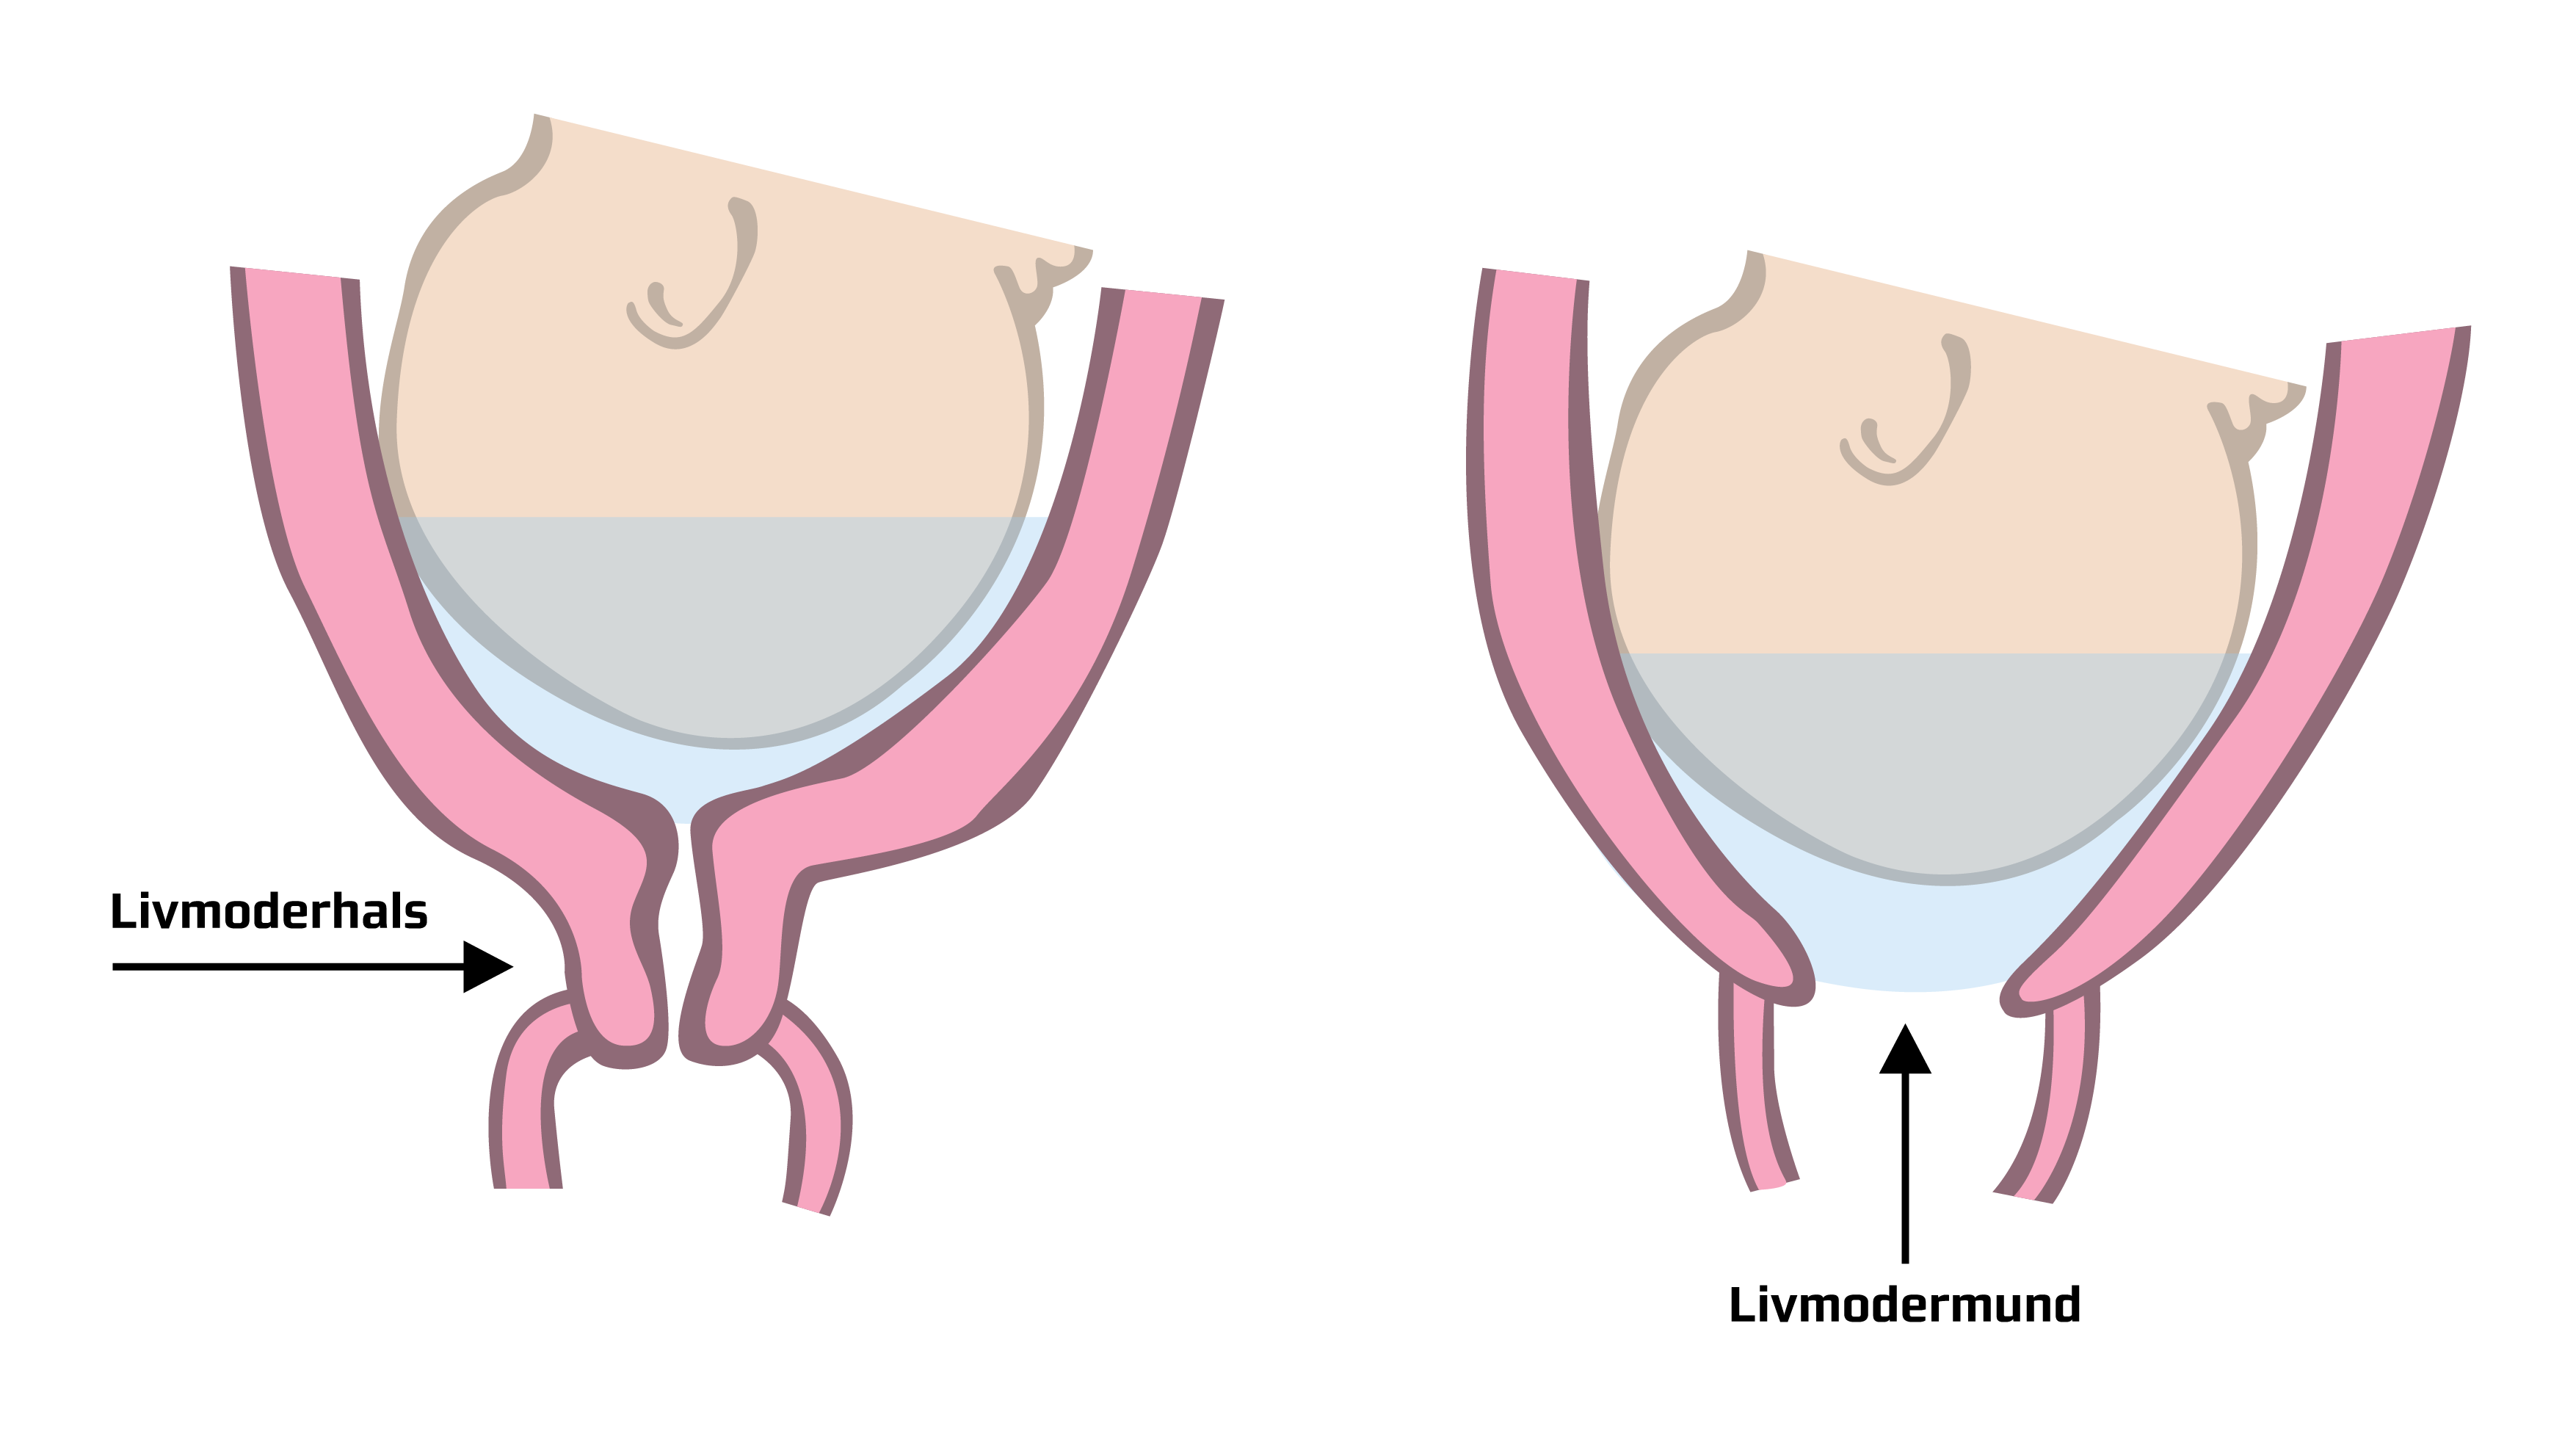 Forskellen på "umoden" og "moden" livmoderhals/livmodermund